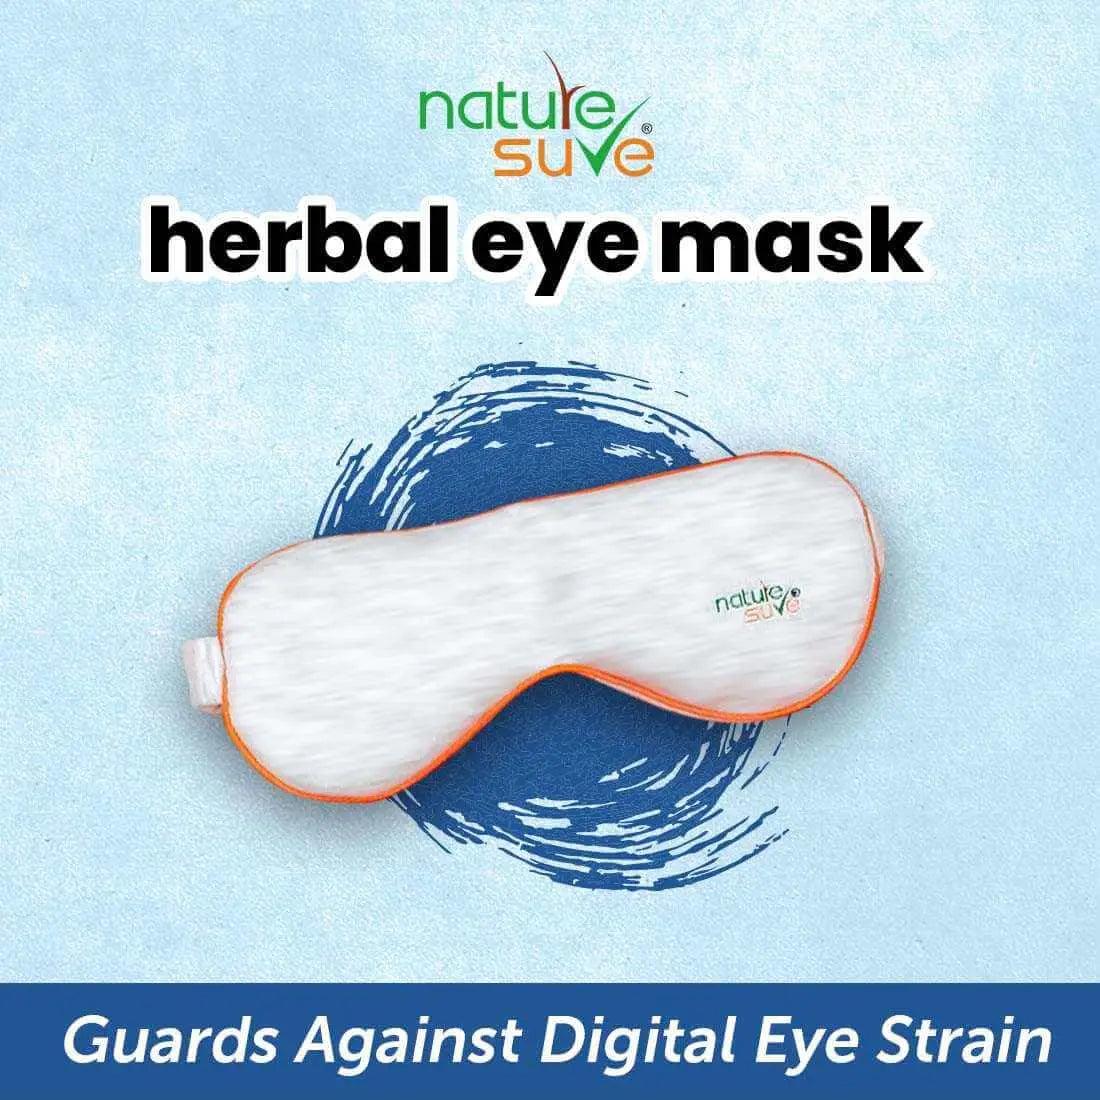 Nature Sure Large Herbal Eye Mask for Digital Eye Strain in Men & Women 8906116280775